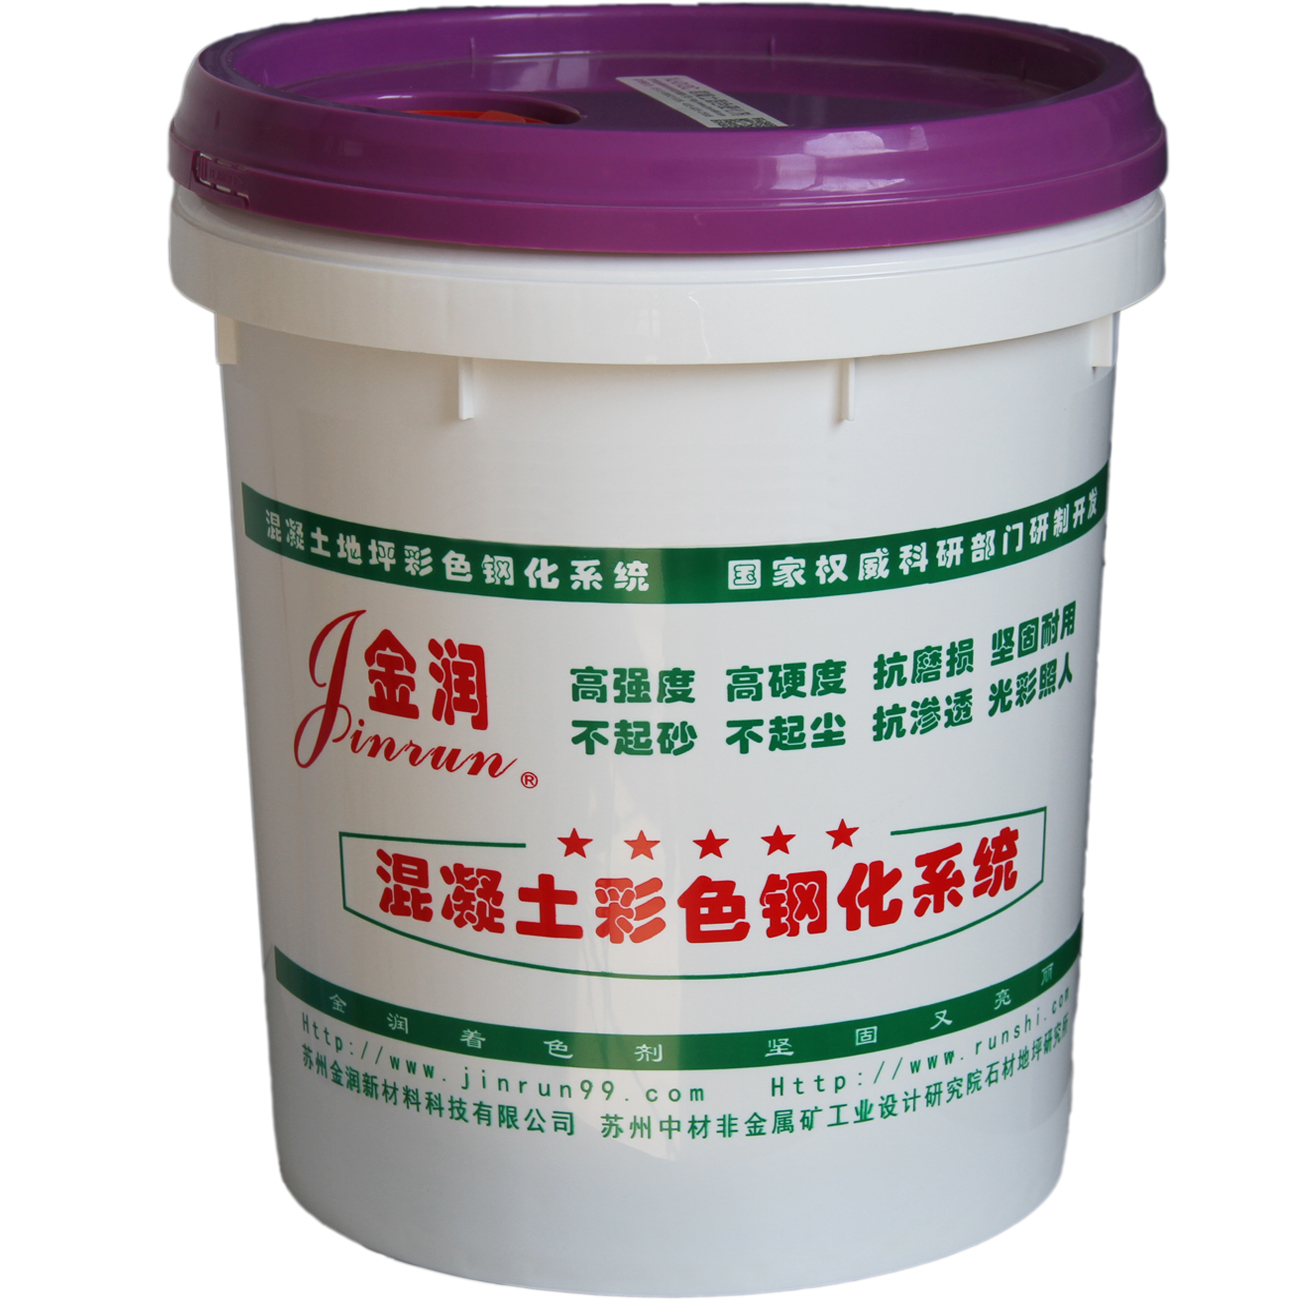 XJ-012C-金润混凝土固色硬化剂